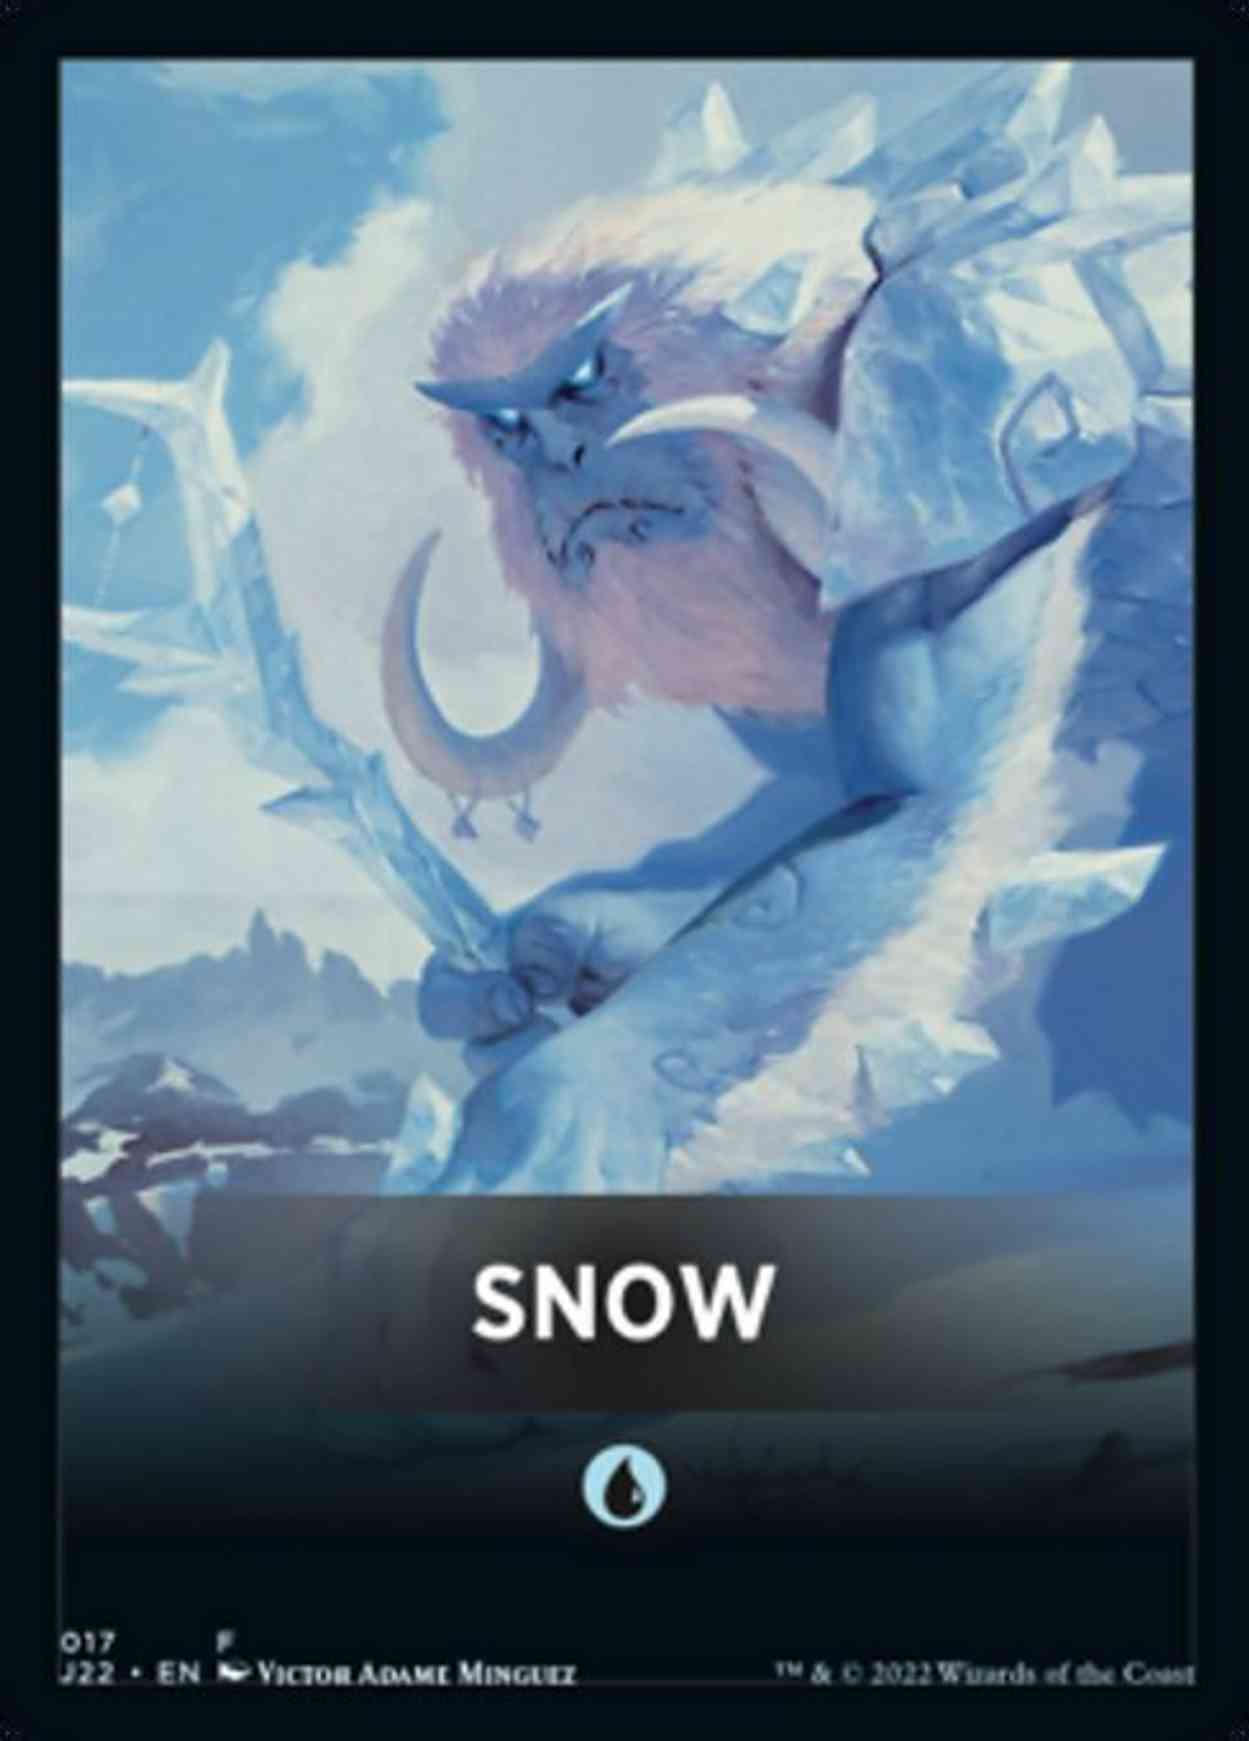 Snow Theme Card magic card front